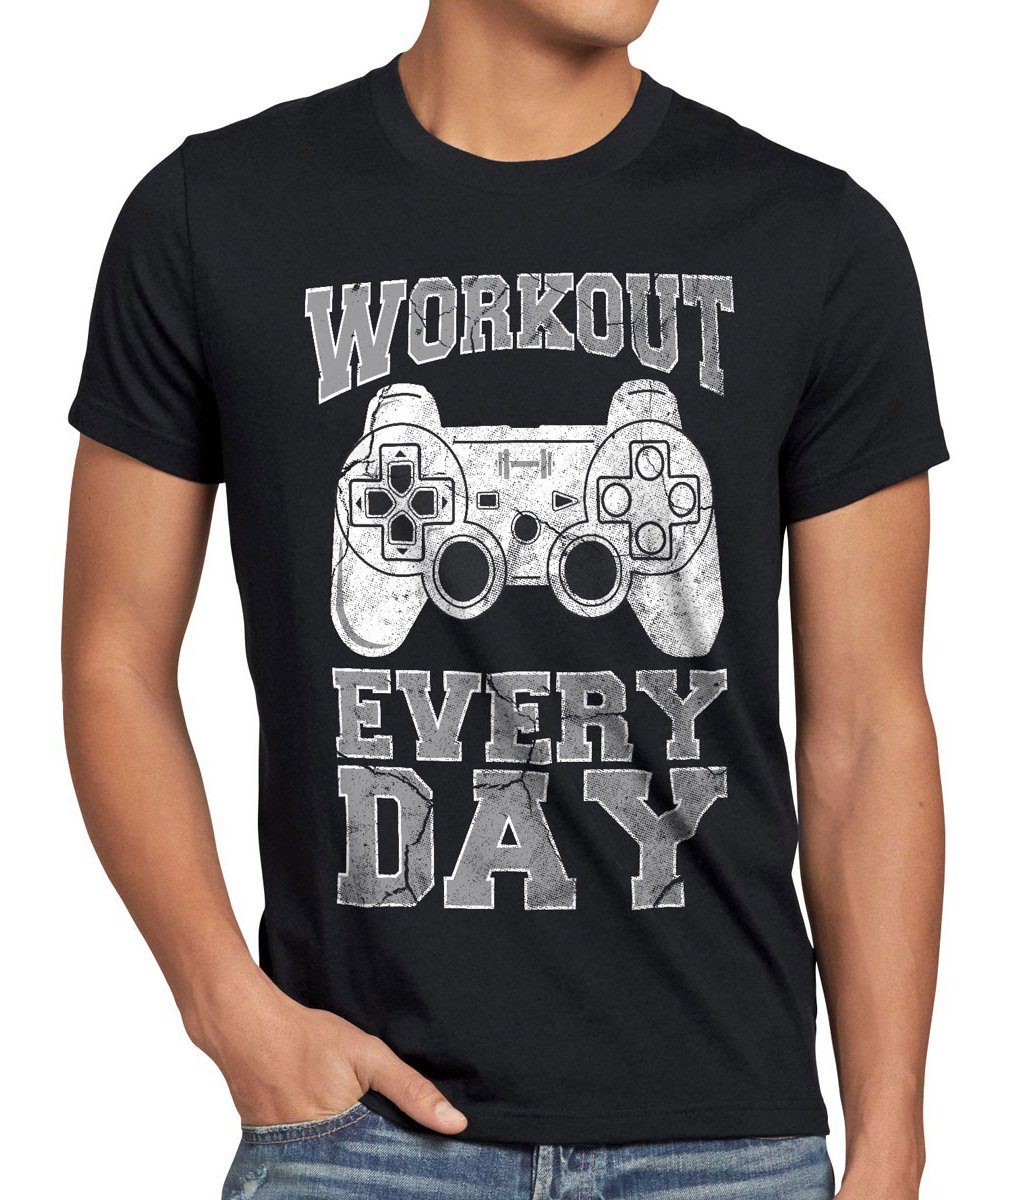 style3 Print-Shirt konsole play T-Shirt station sport Gamer Herren schwarz kontroller game gym Workout fun